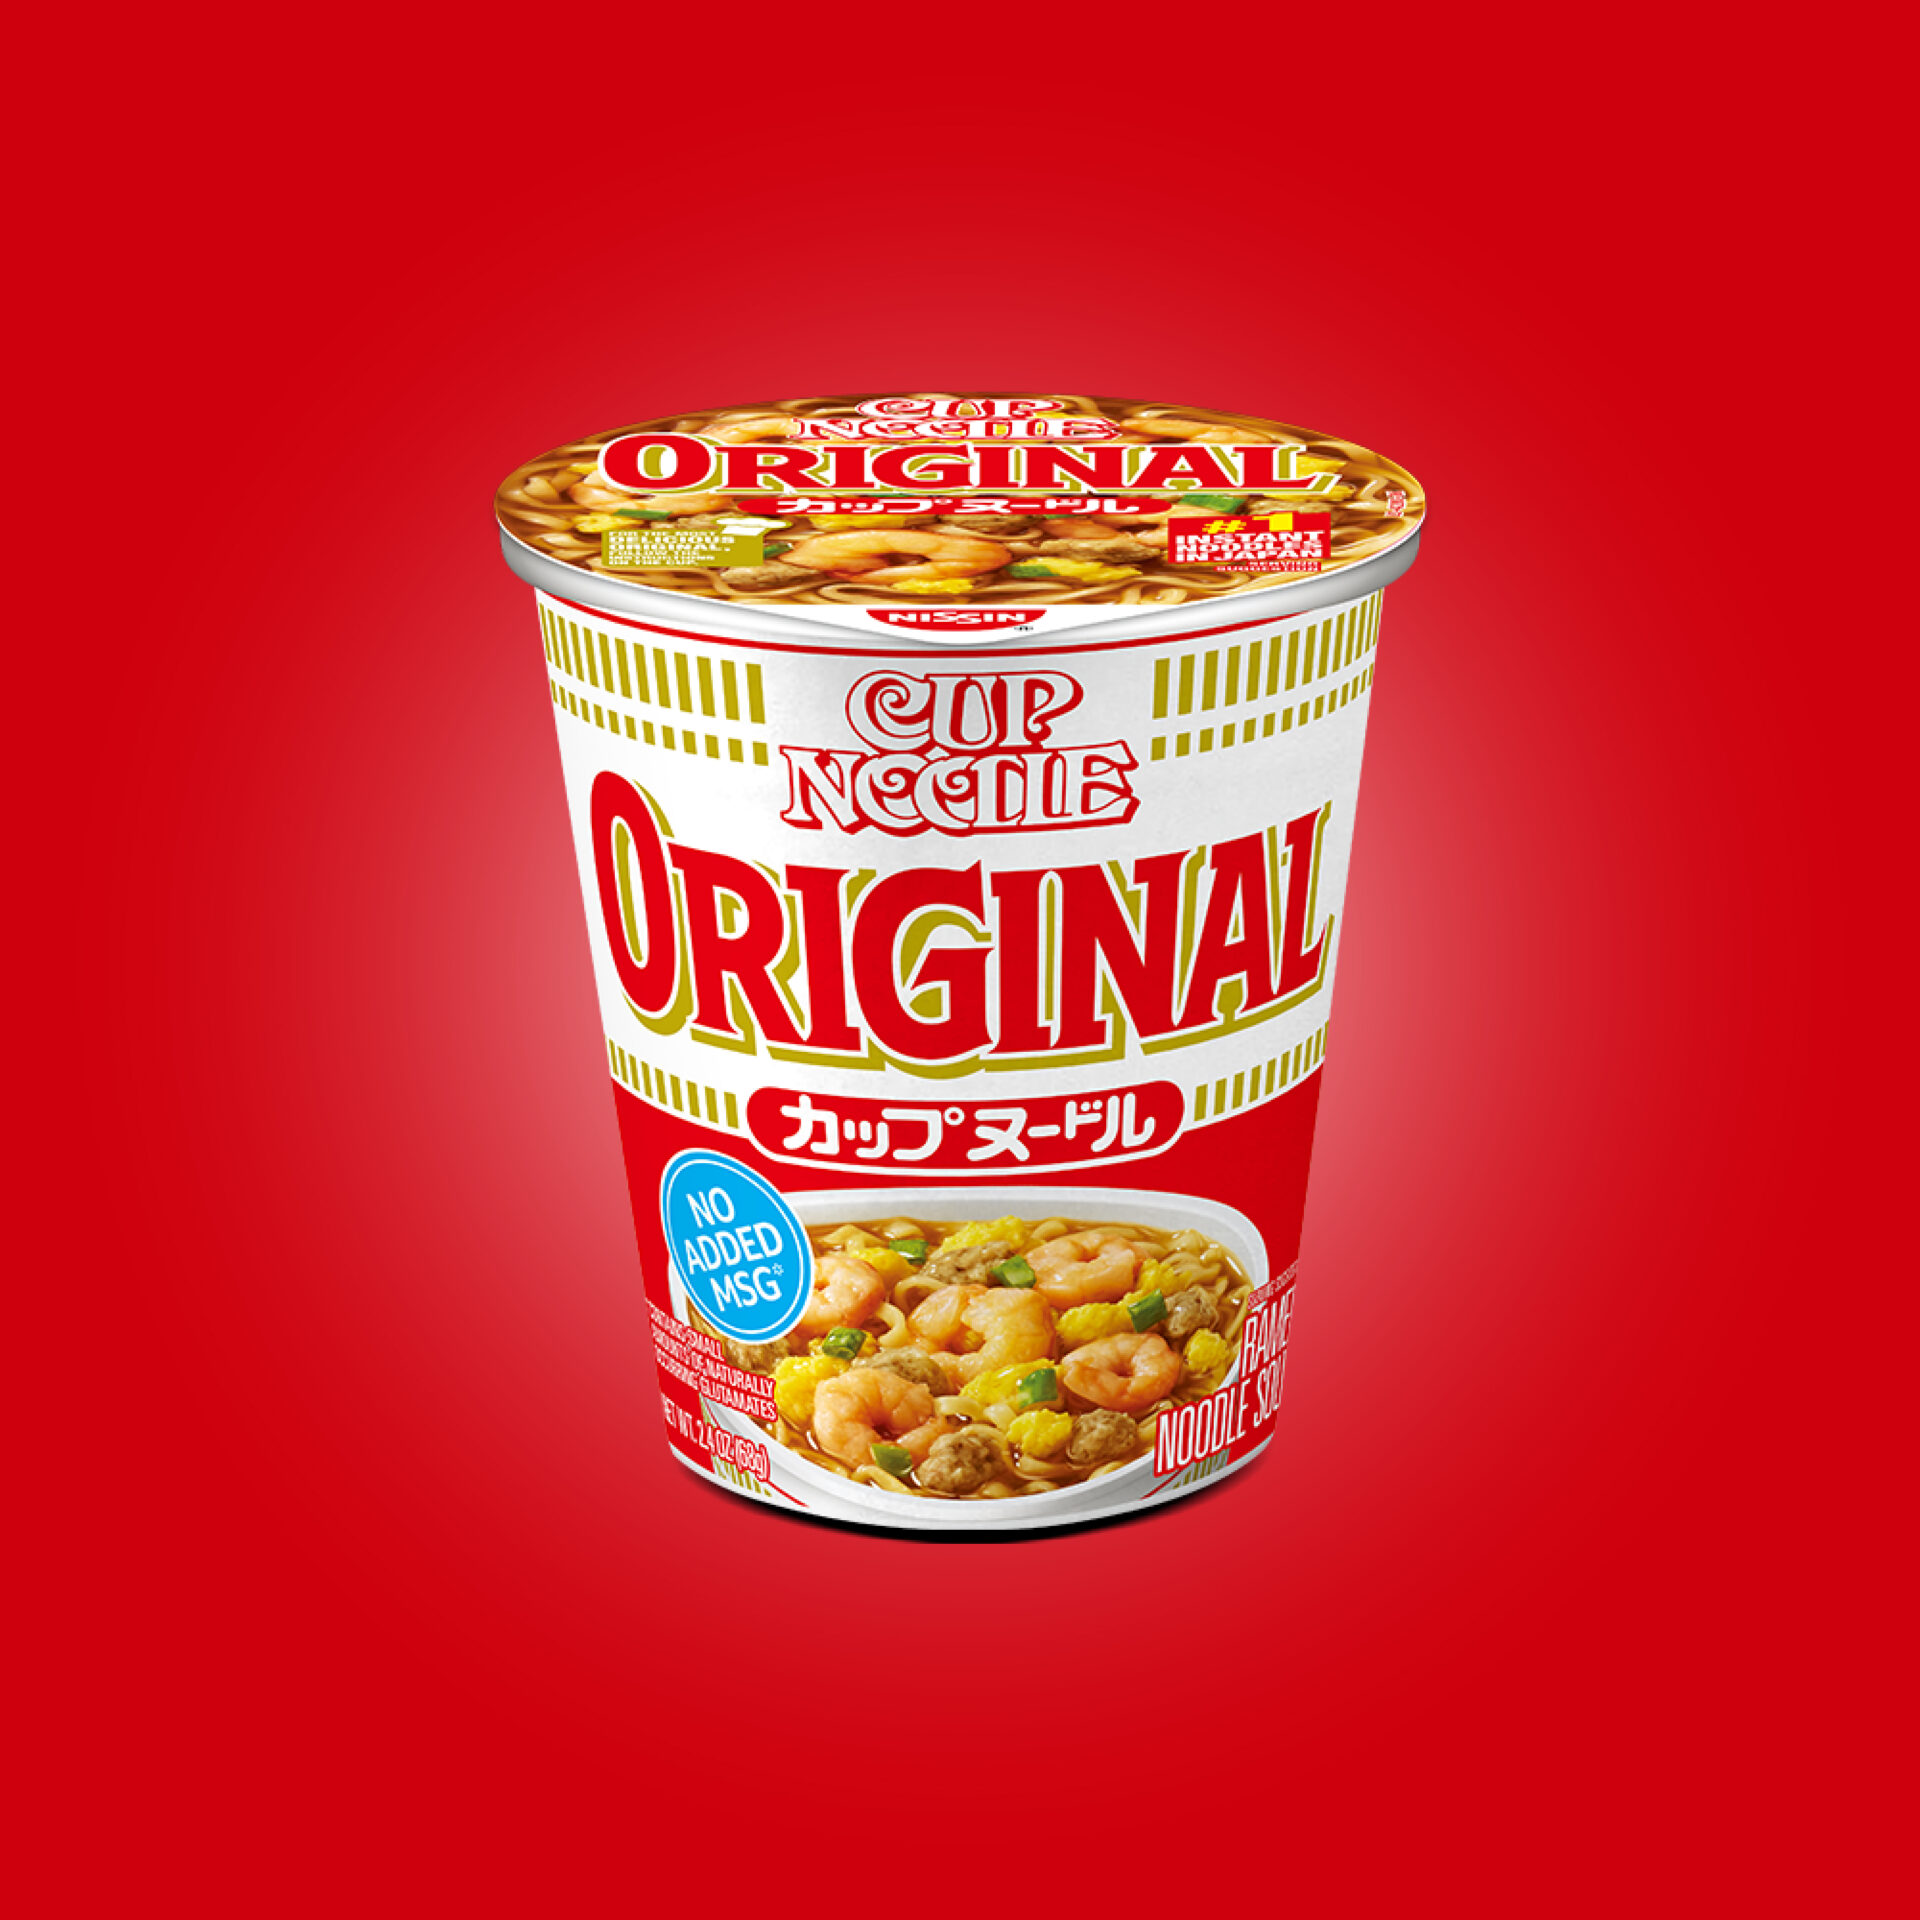 Cup Noodle Original - Nissin Food